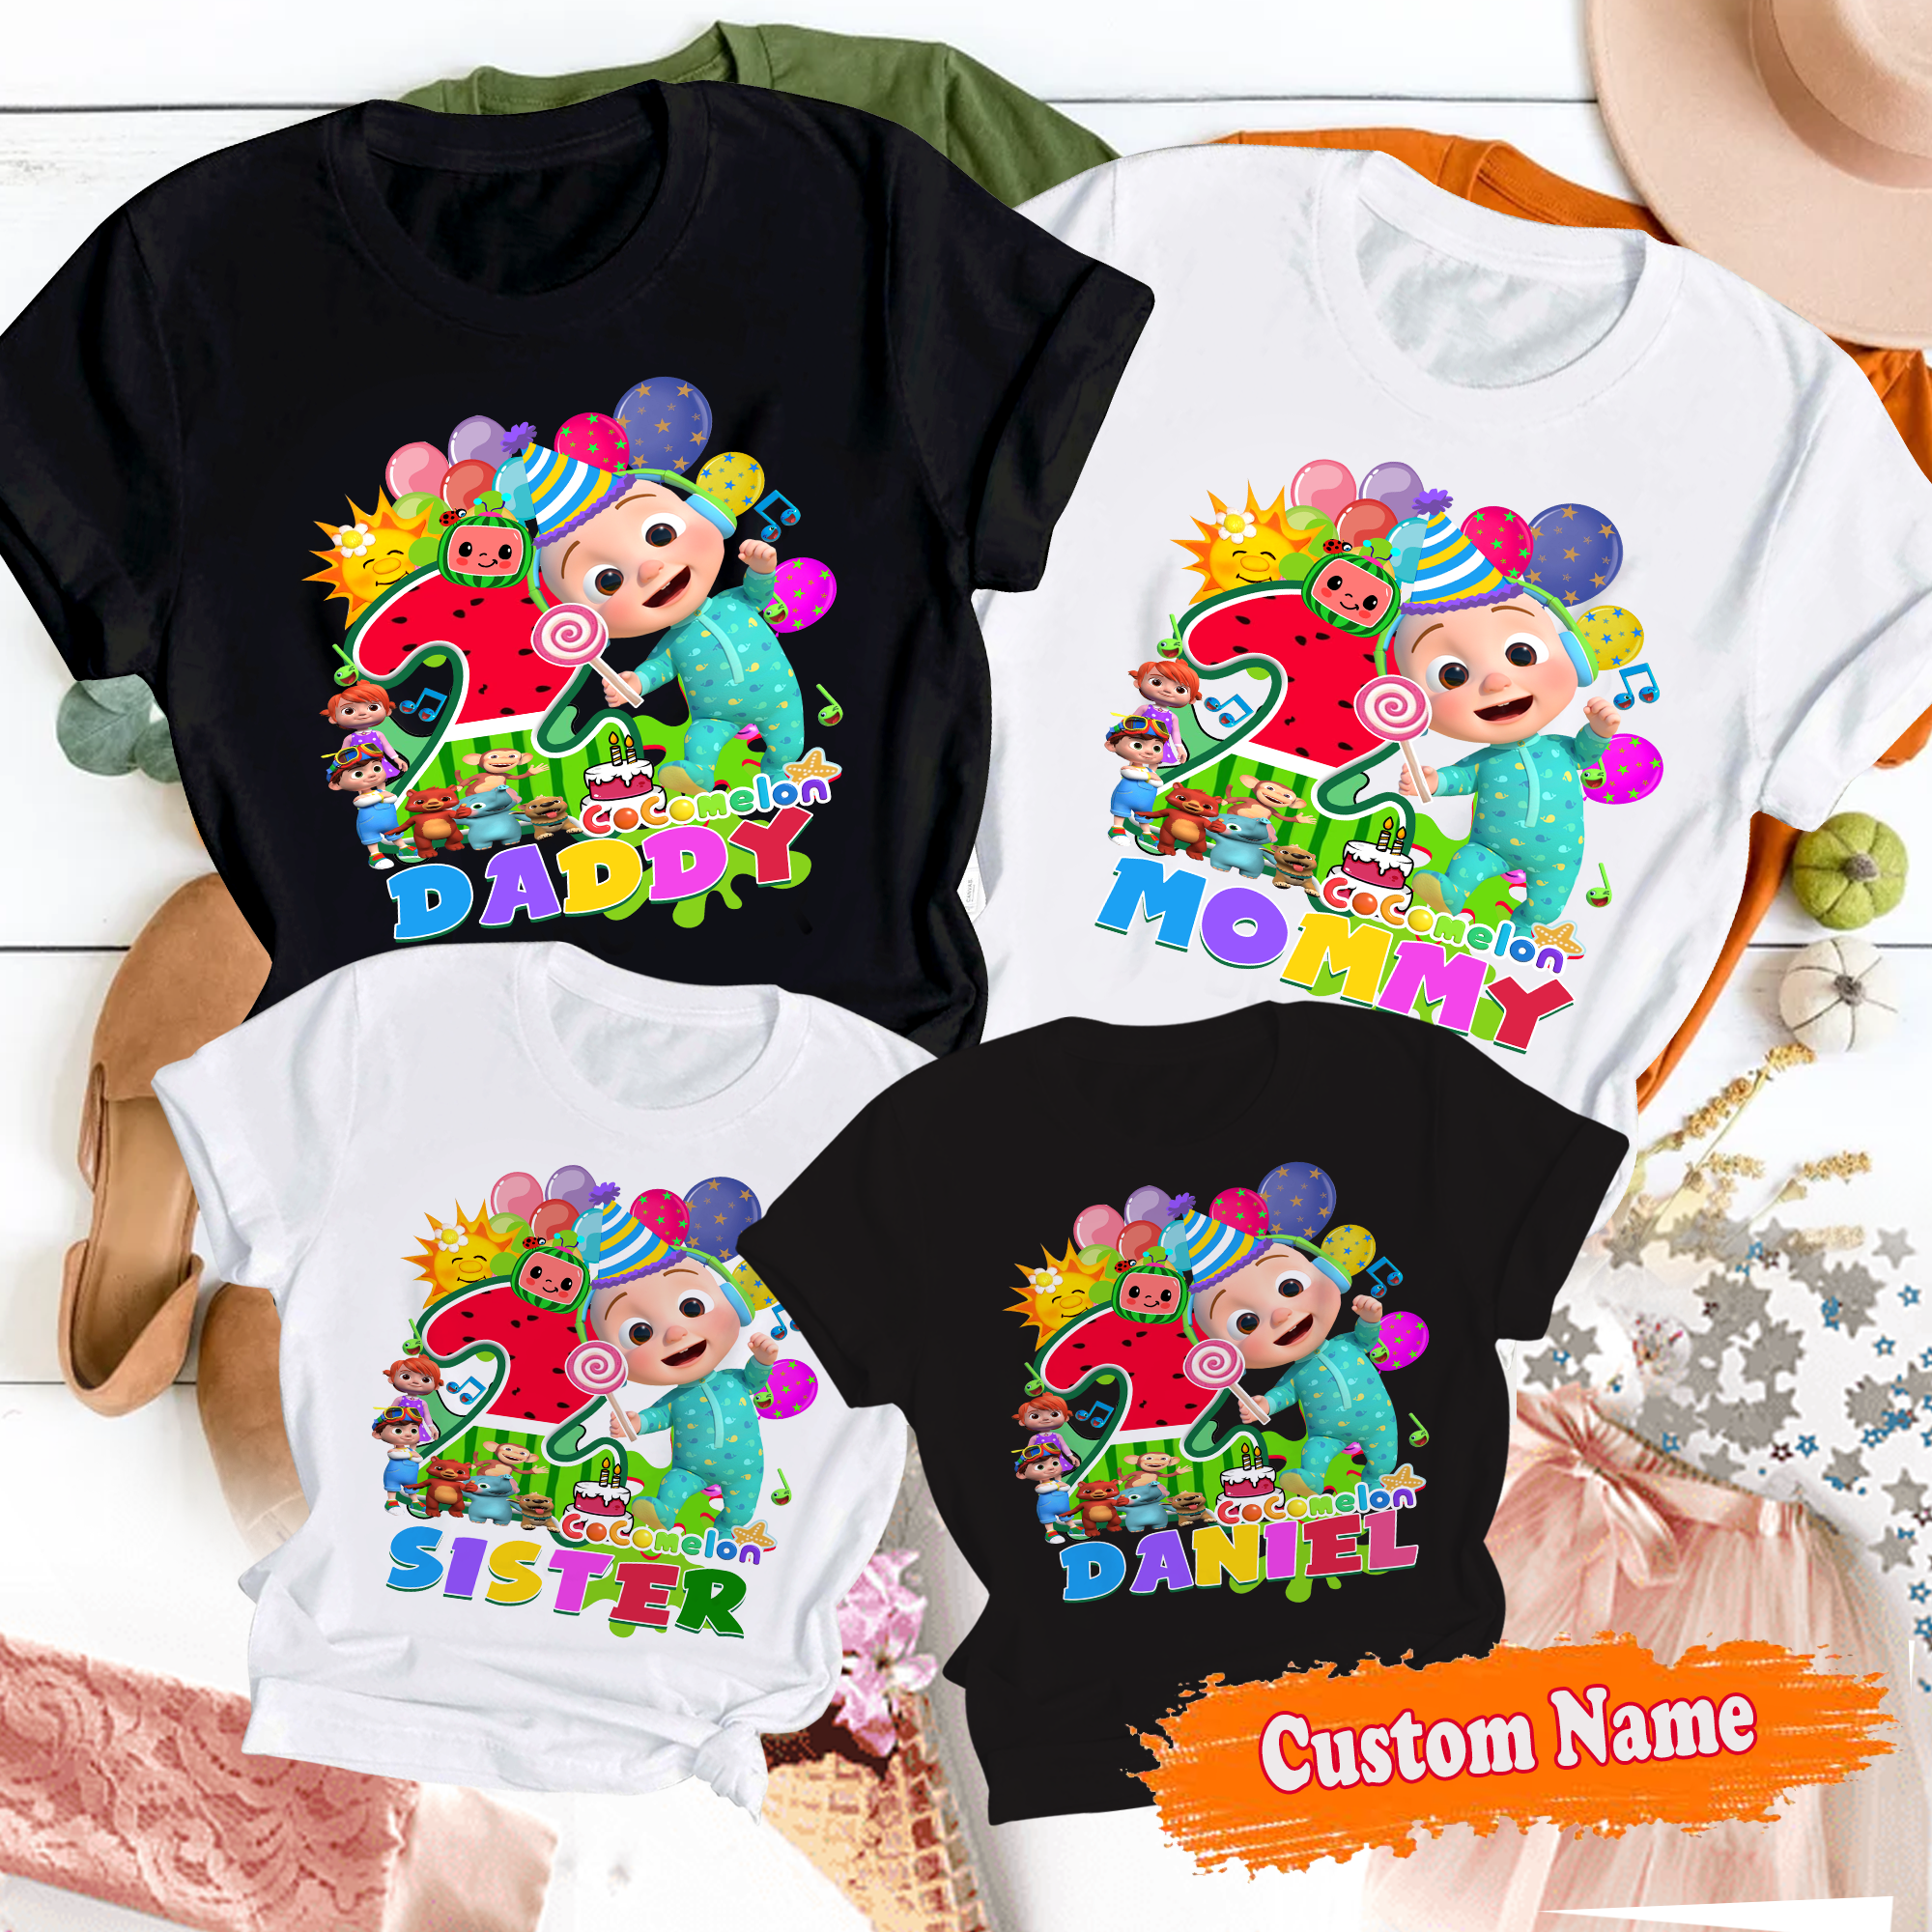 Cocomelon Shirt, Cocomelon Family matching shirt, Cocomelon Party Family Shirt, Birthday Party Shirt, Personalized Coco-melon Birthday Shirt Shirt,